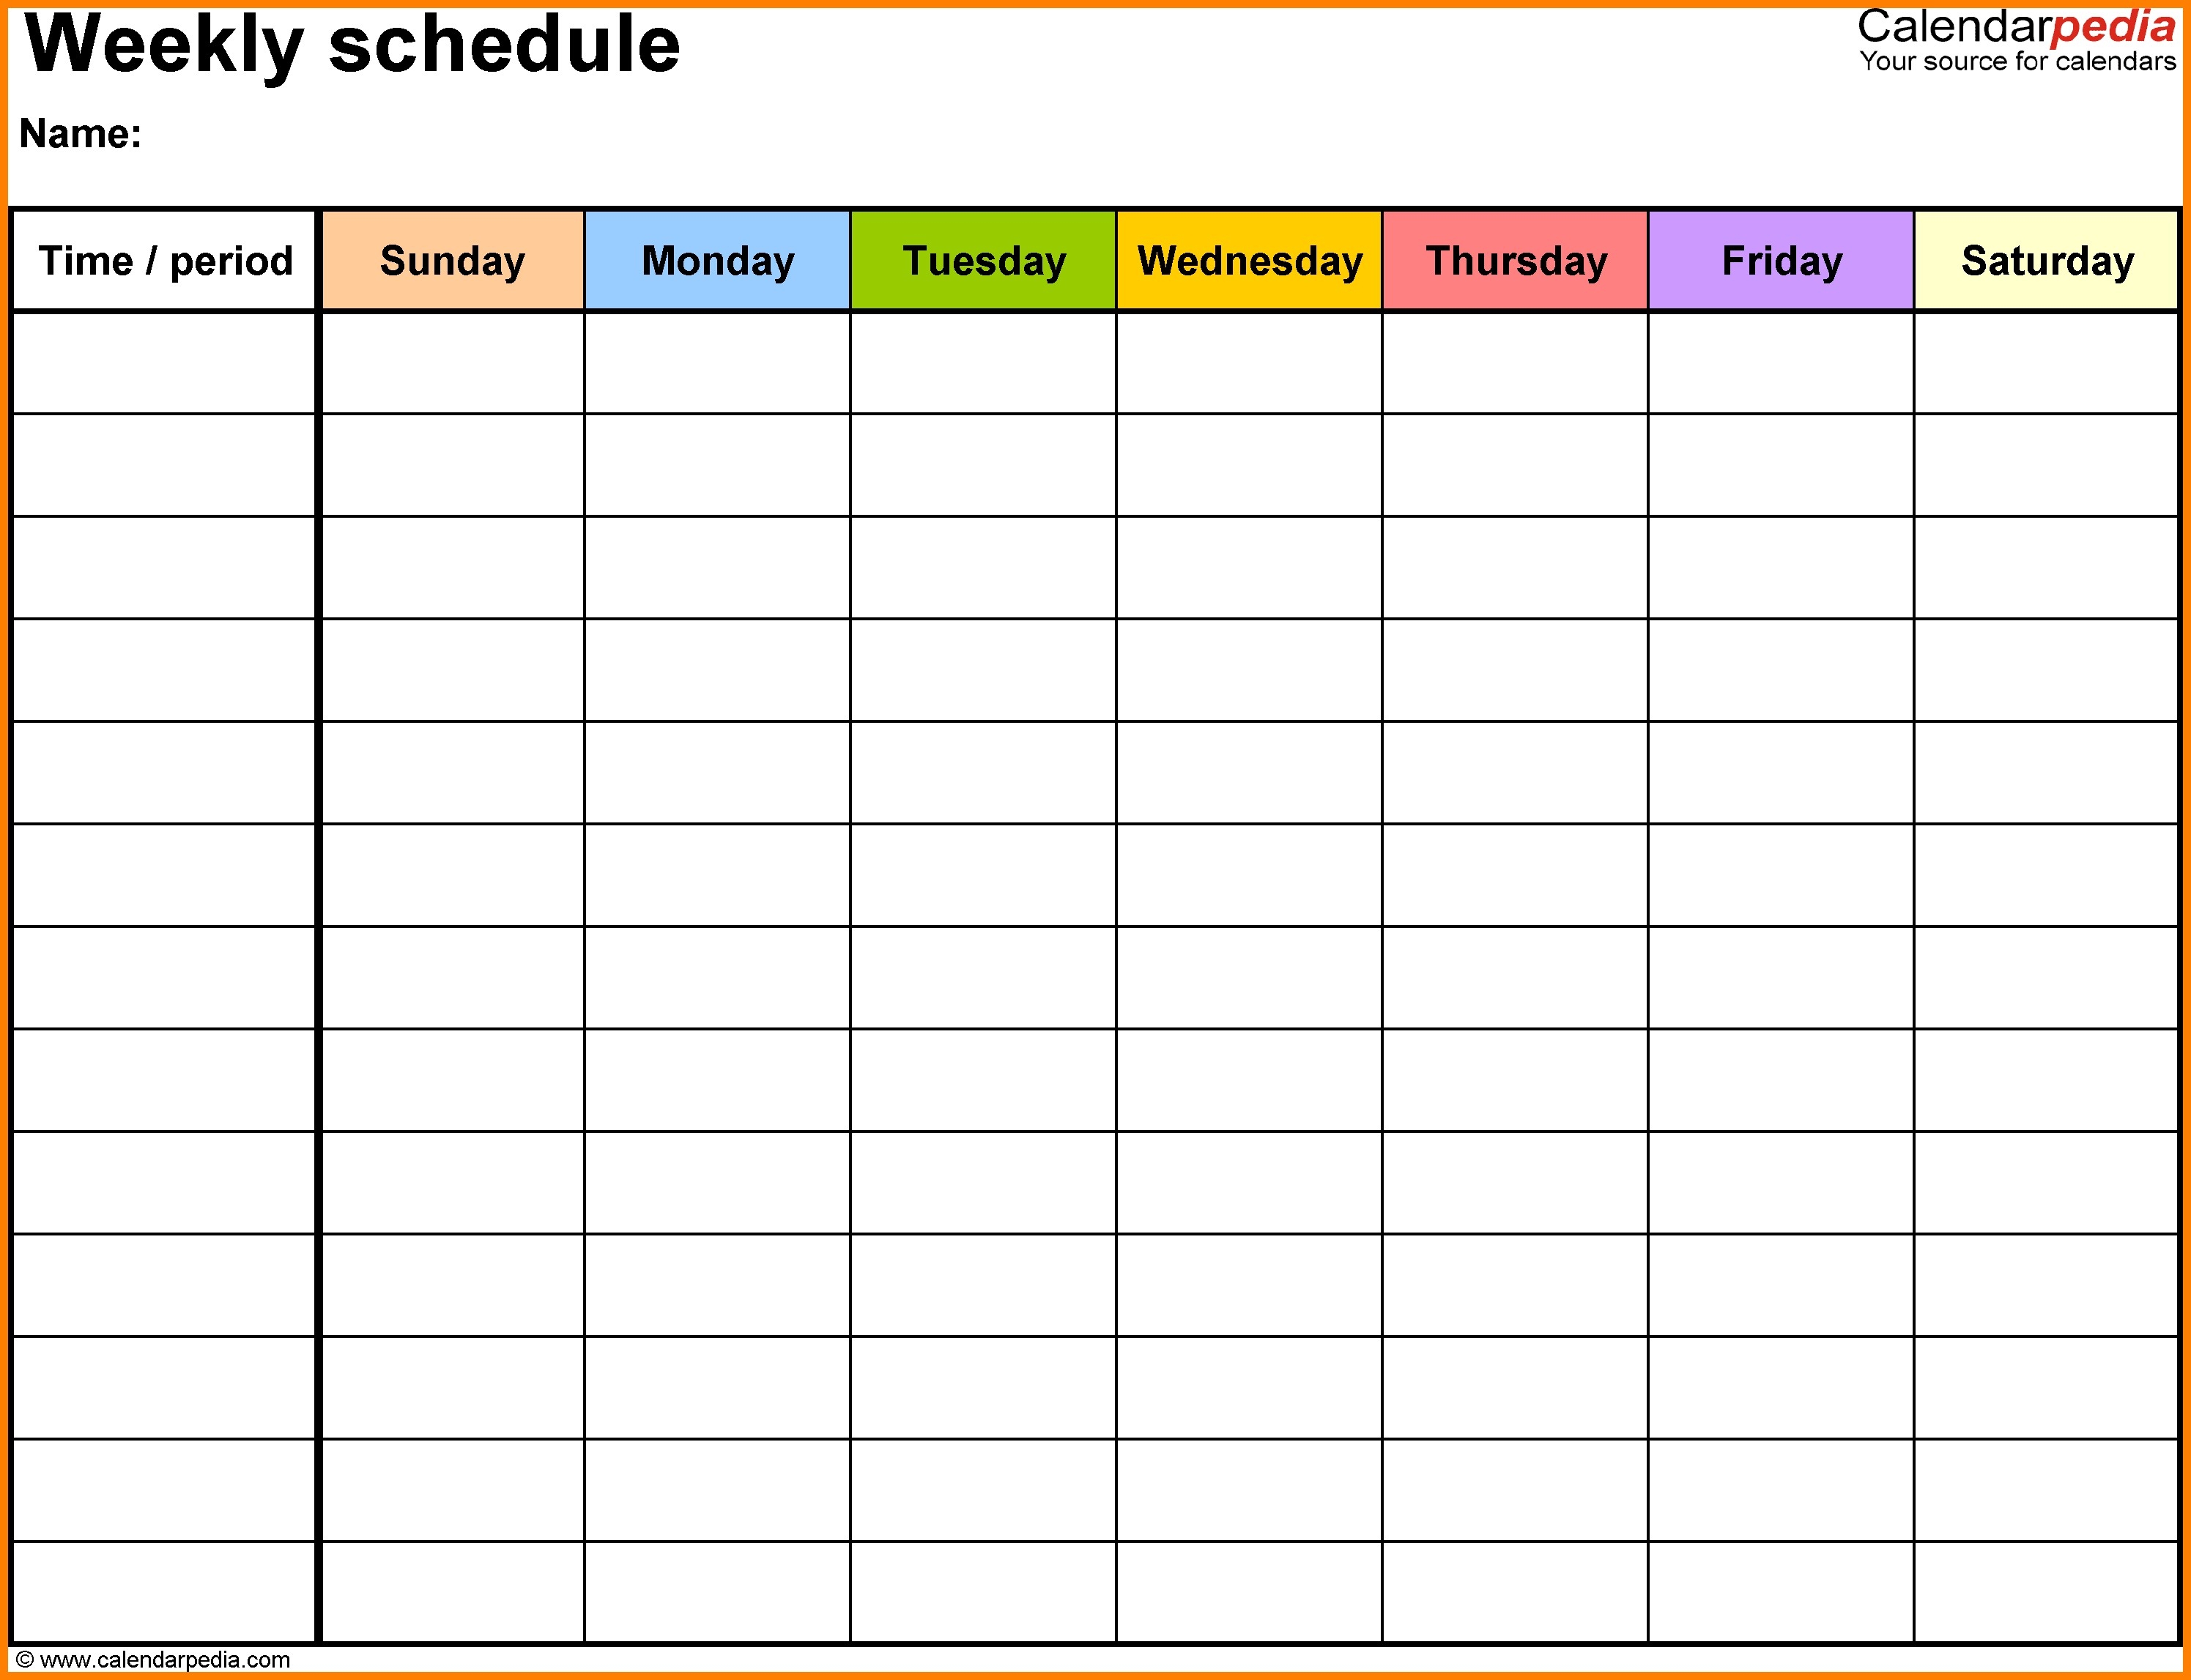 Calendar Template Google Docs 4 For Google Drive Calendar-Google Drive Calendar Template